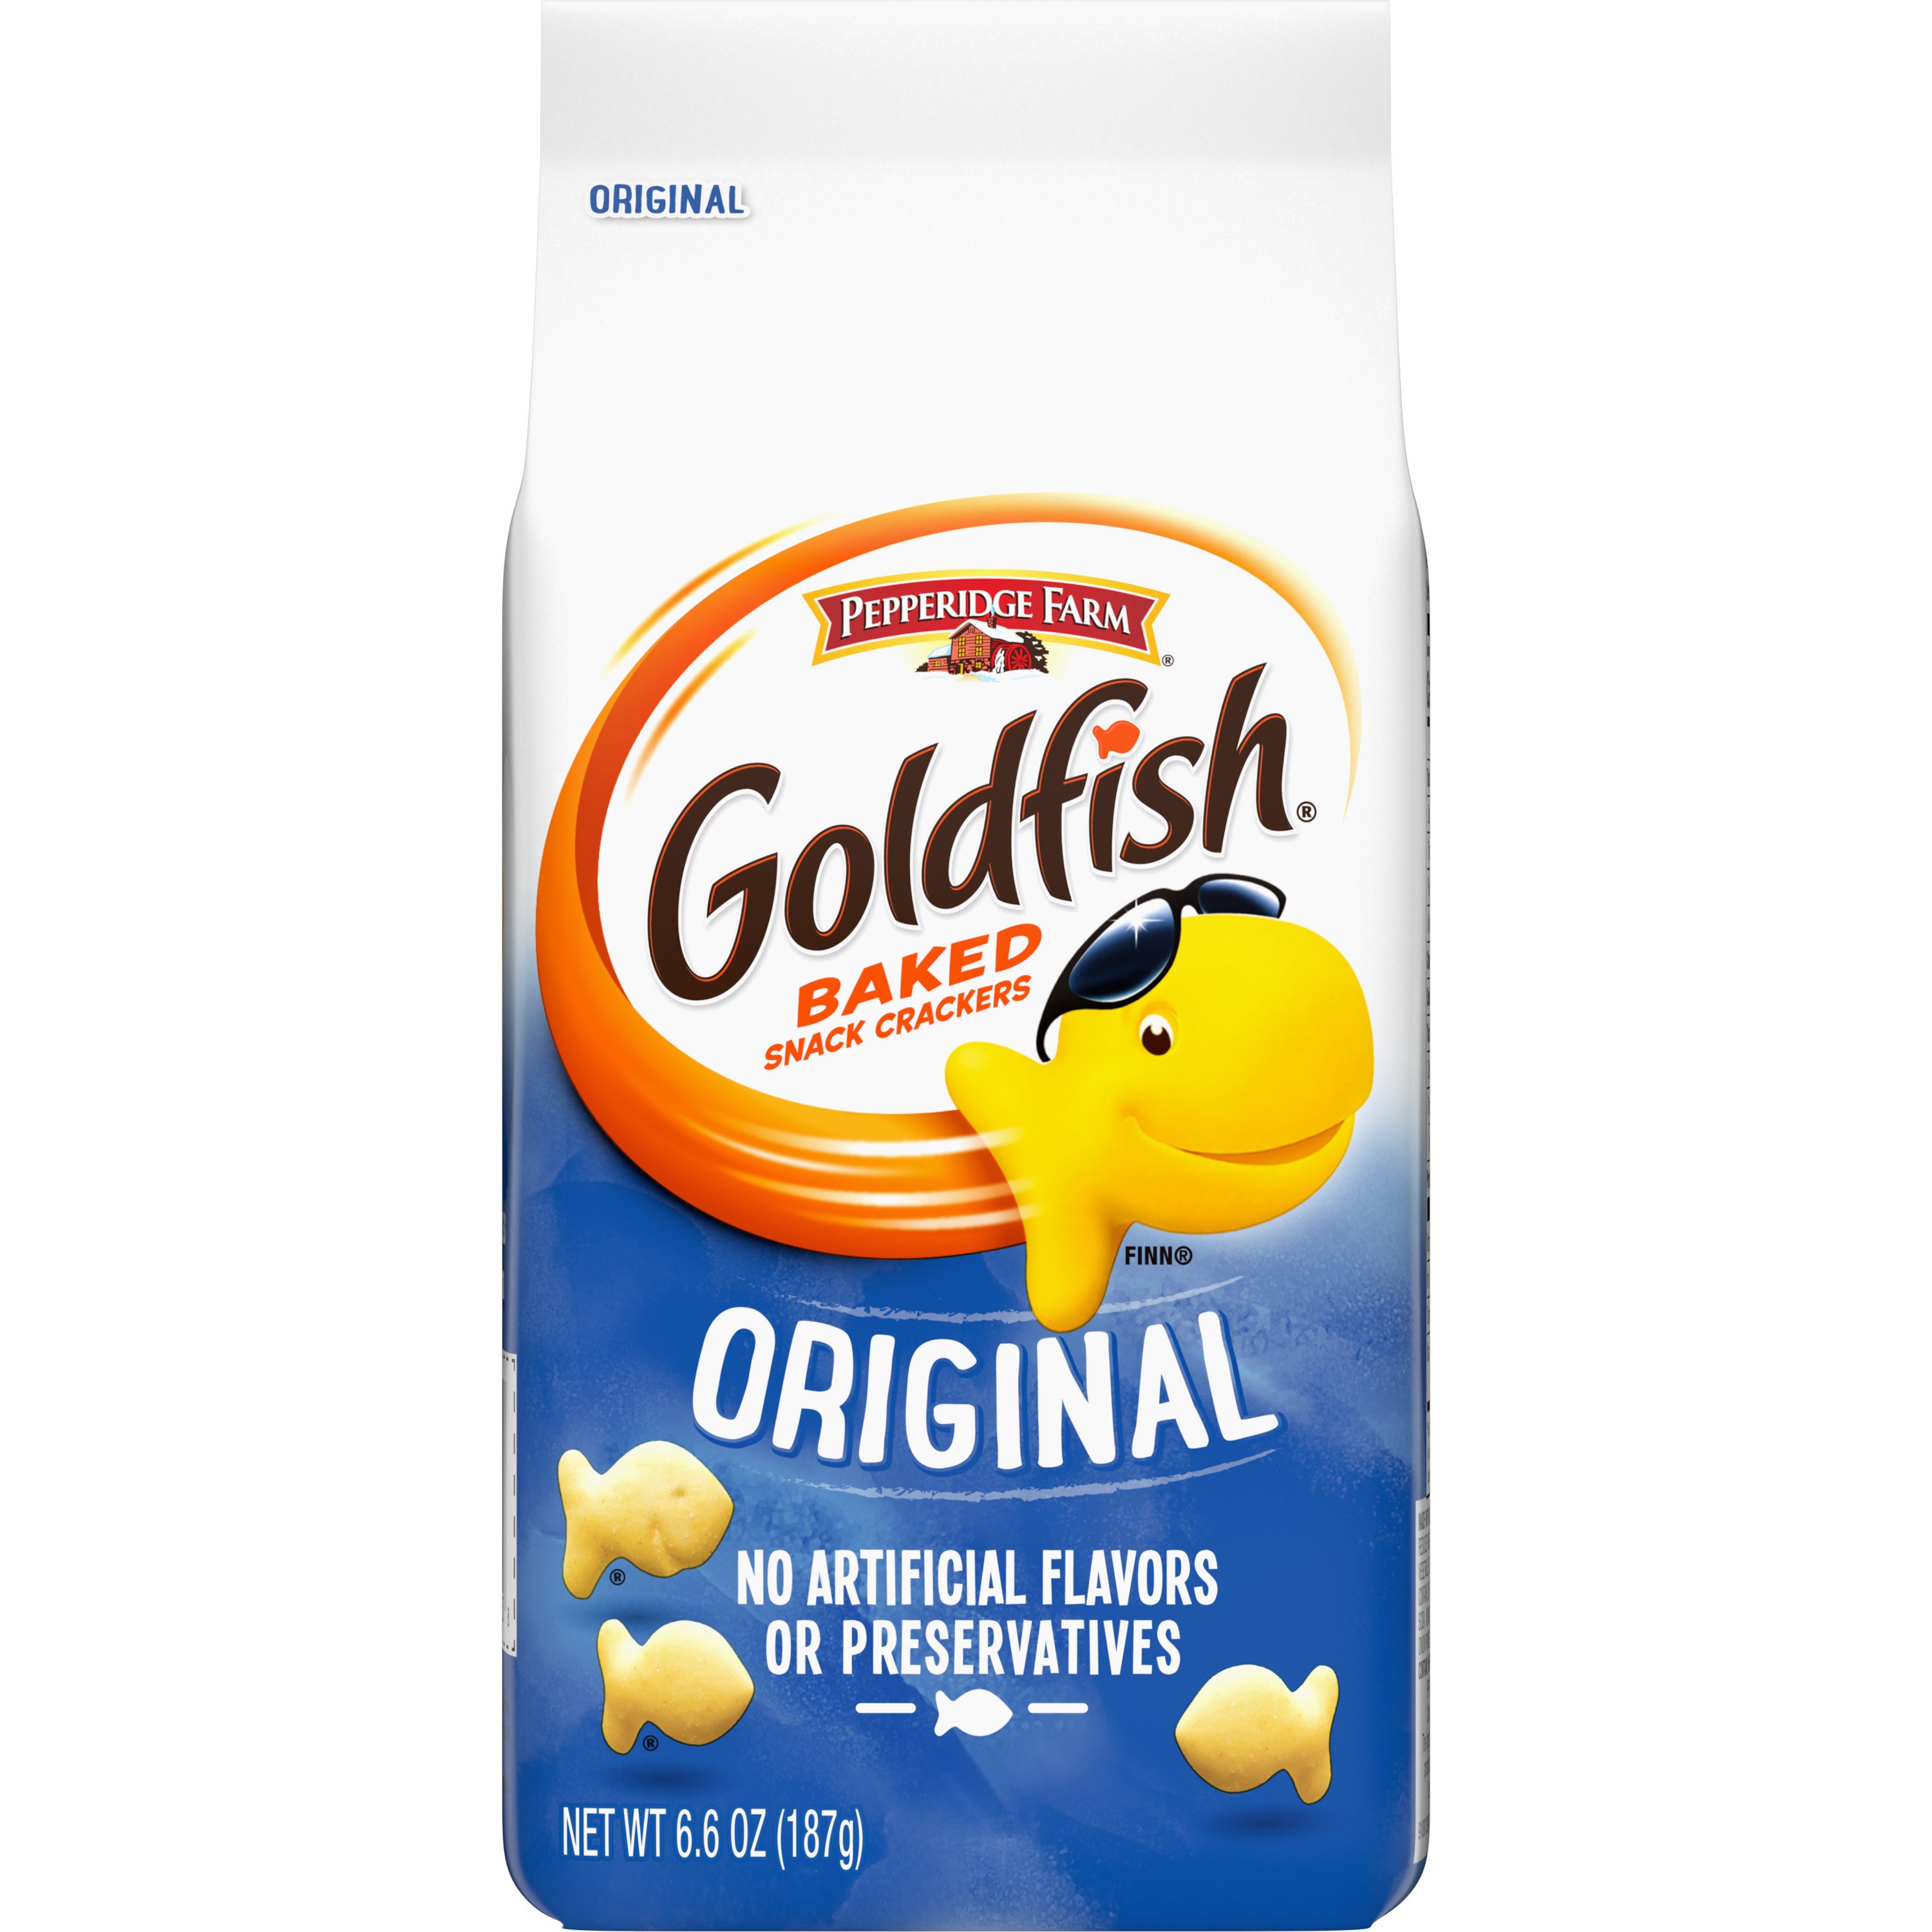 Goldfish Original Snack Crackers - Shop Crackers & Breadsticks at H-E-B